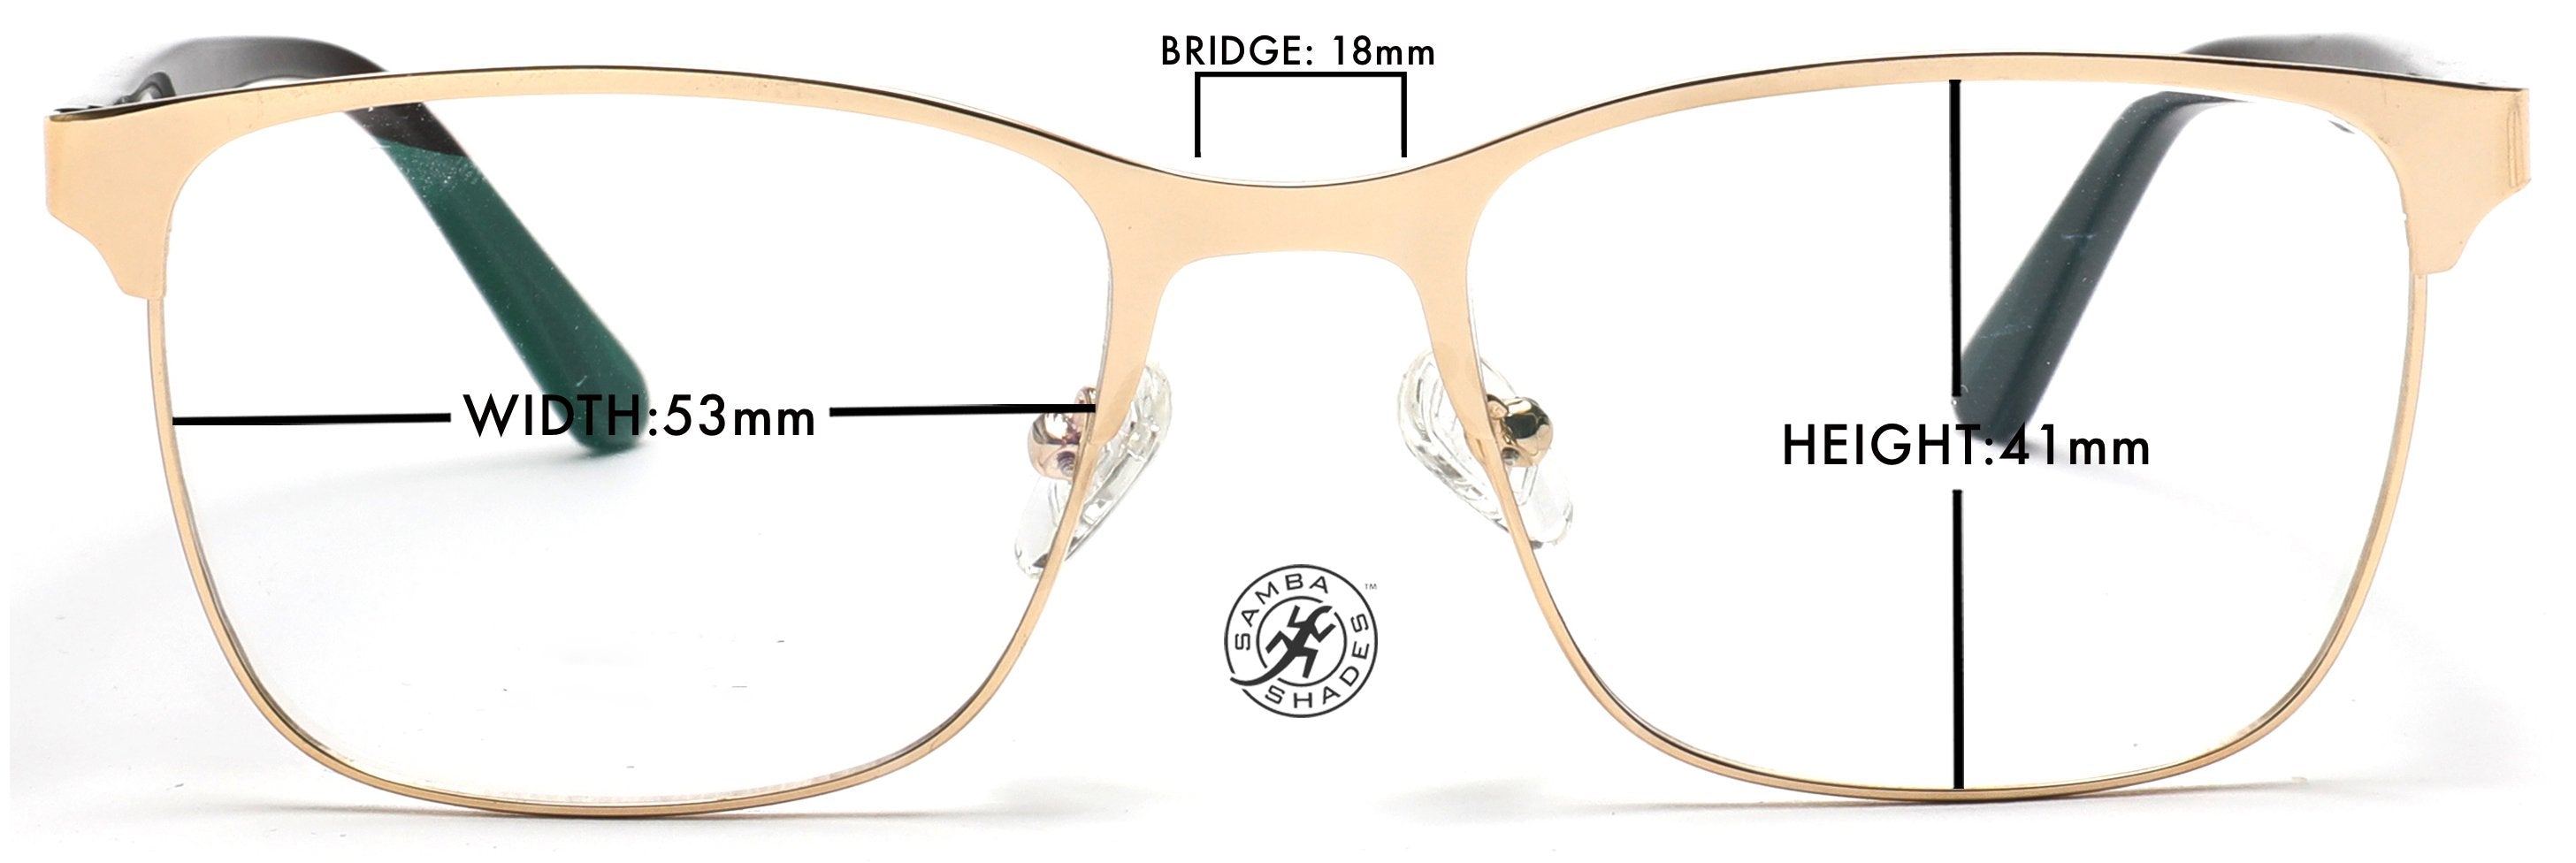 Tango Optics Square Metal Eyeglasses Frame Luxe RX Stainless Steel Grace Hopper Yellow For Prescription Lens-Samba Shades